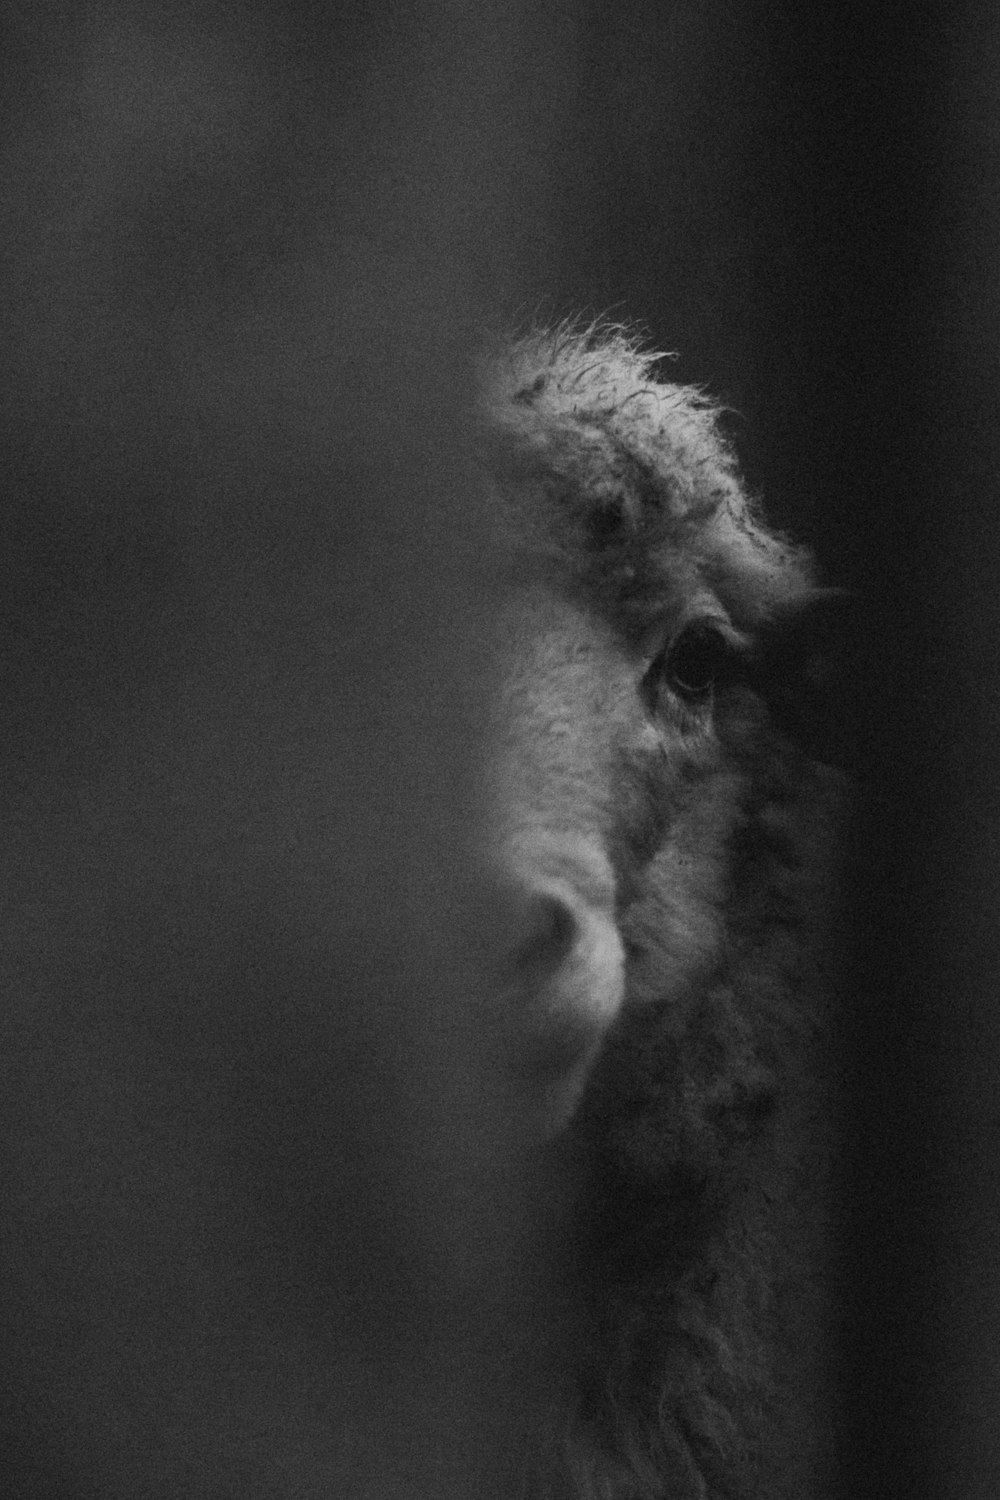 grayscale photo of sheep head